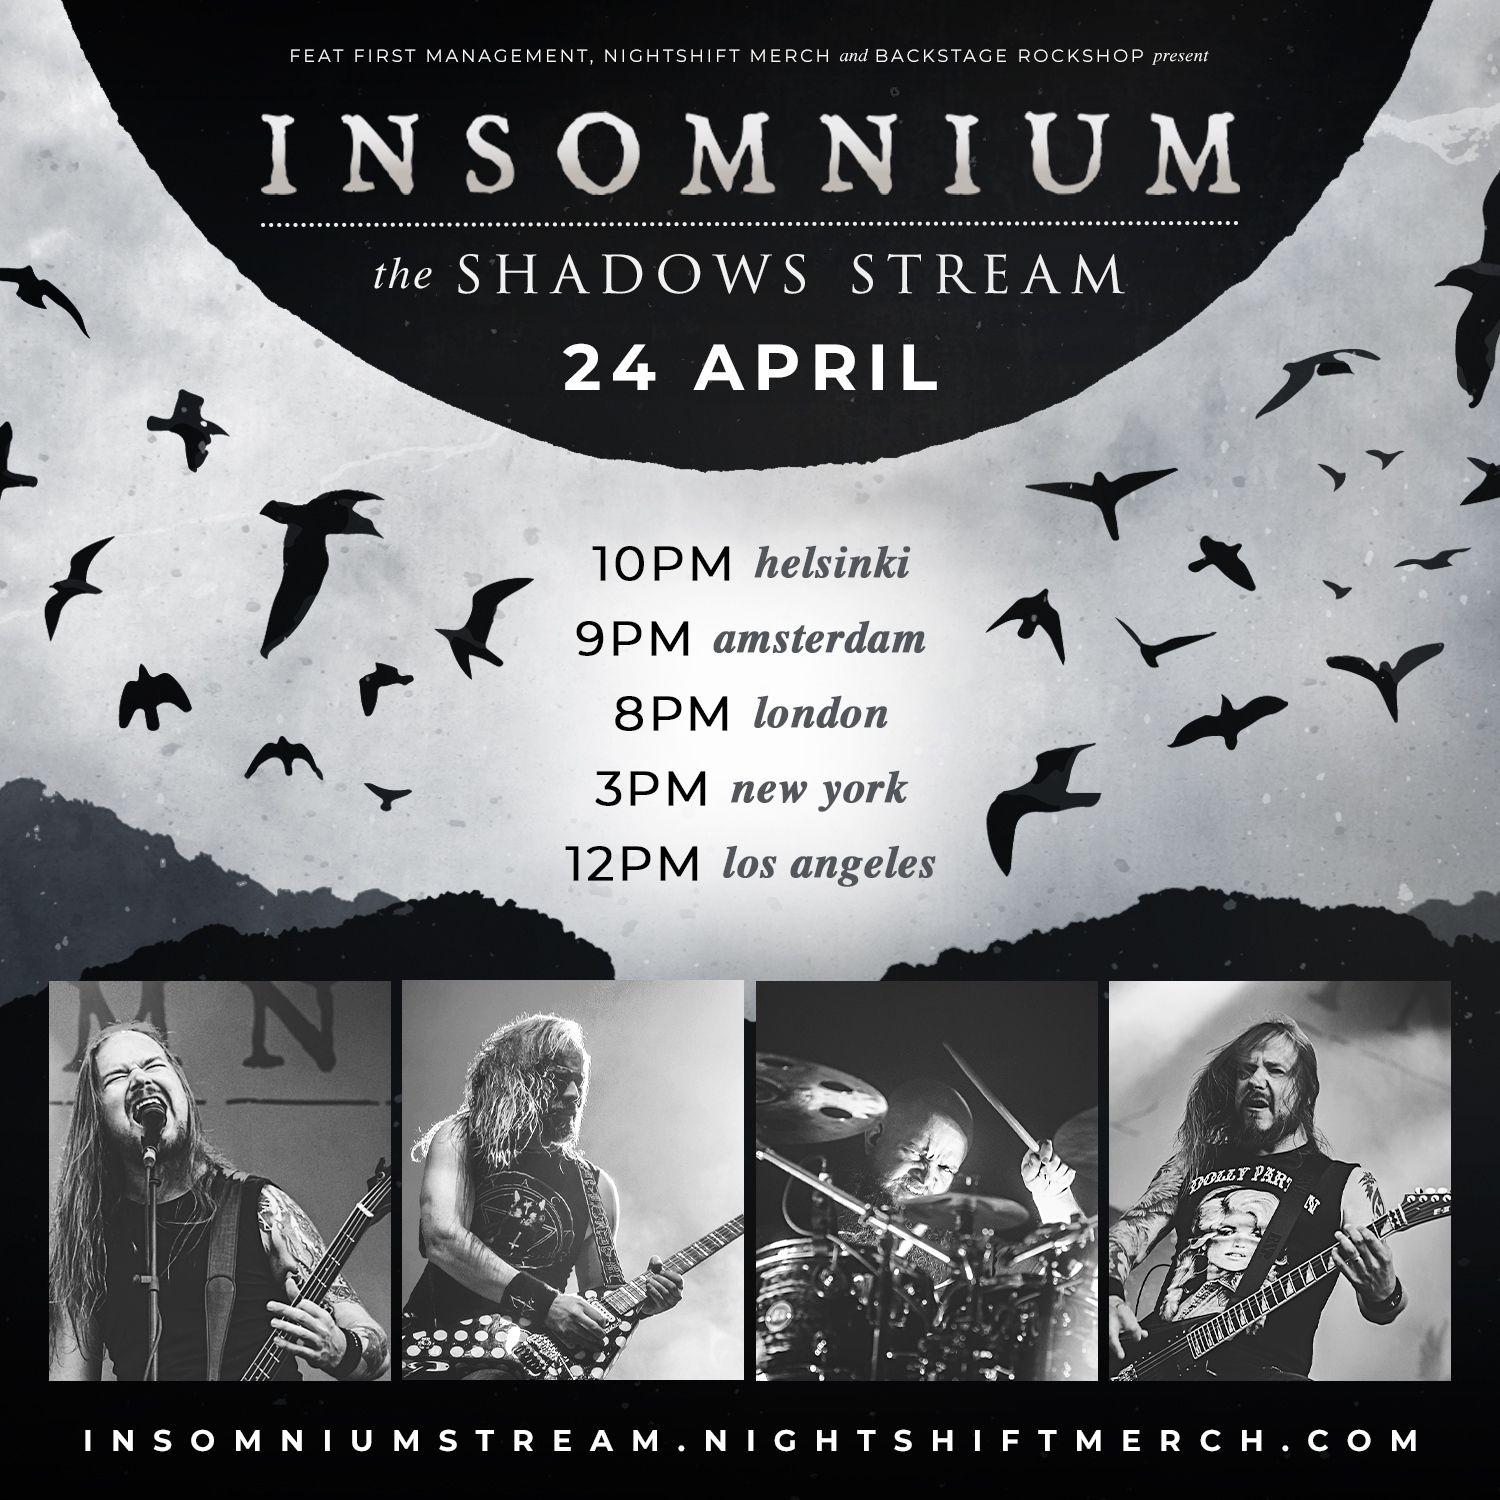 "The Shadows Stream" findet am 24. April statt